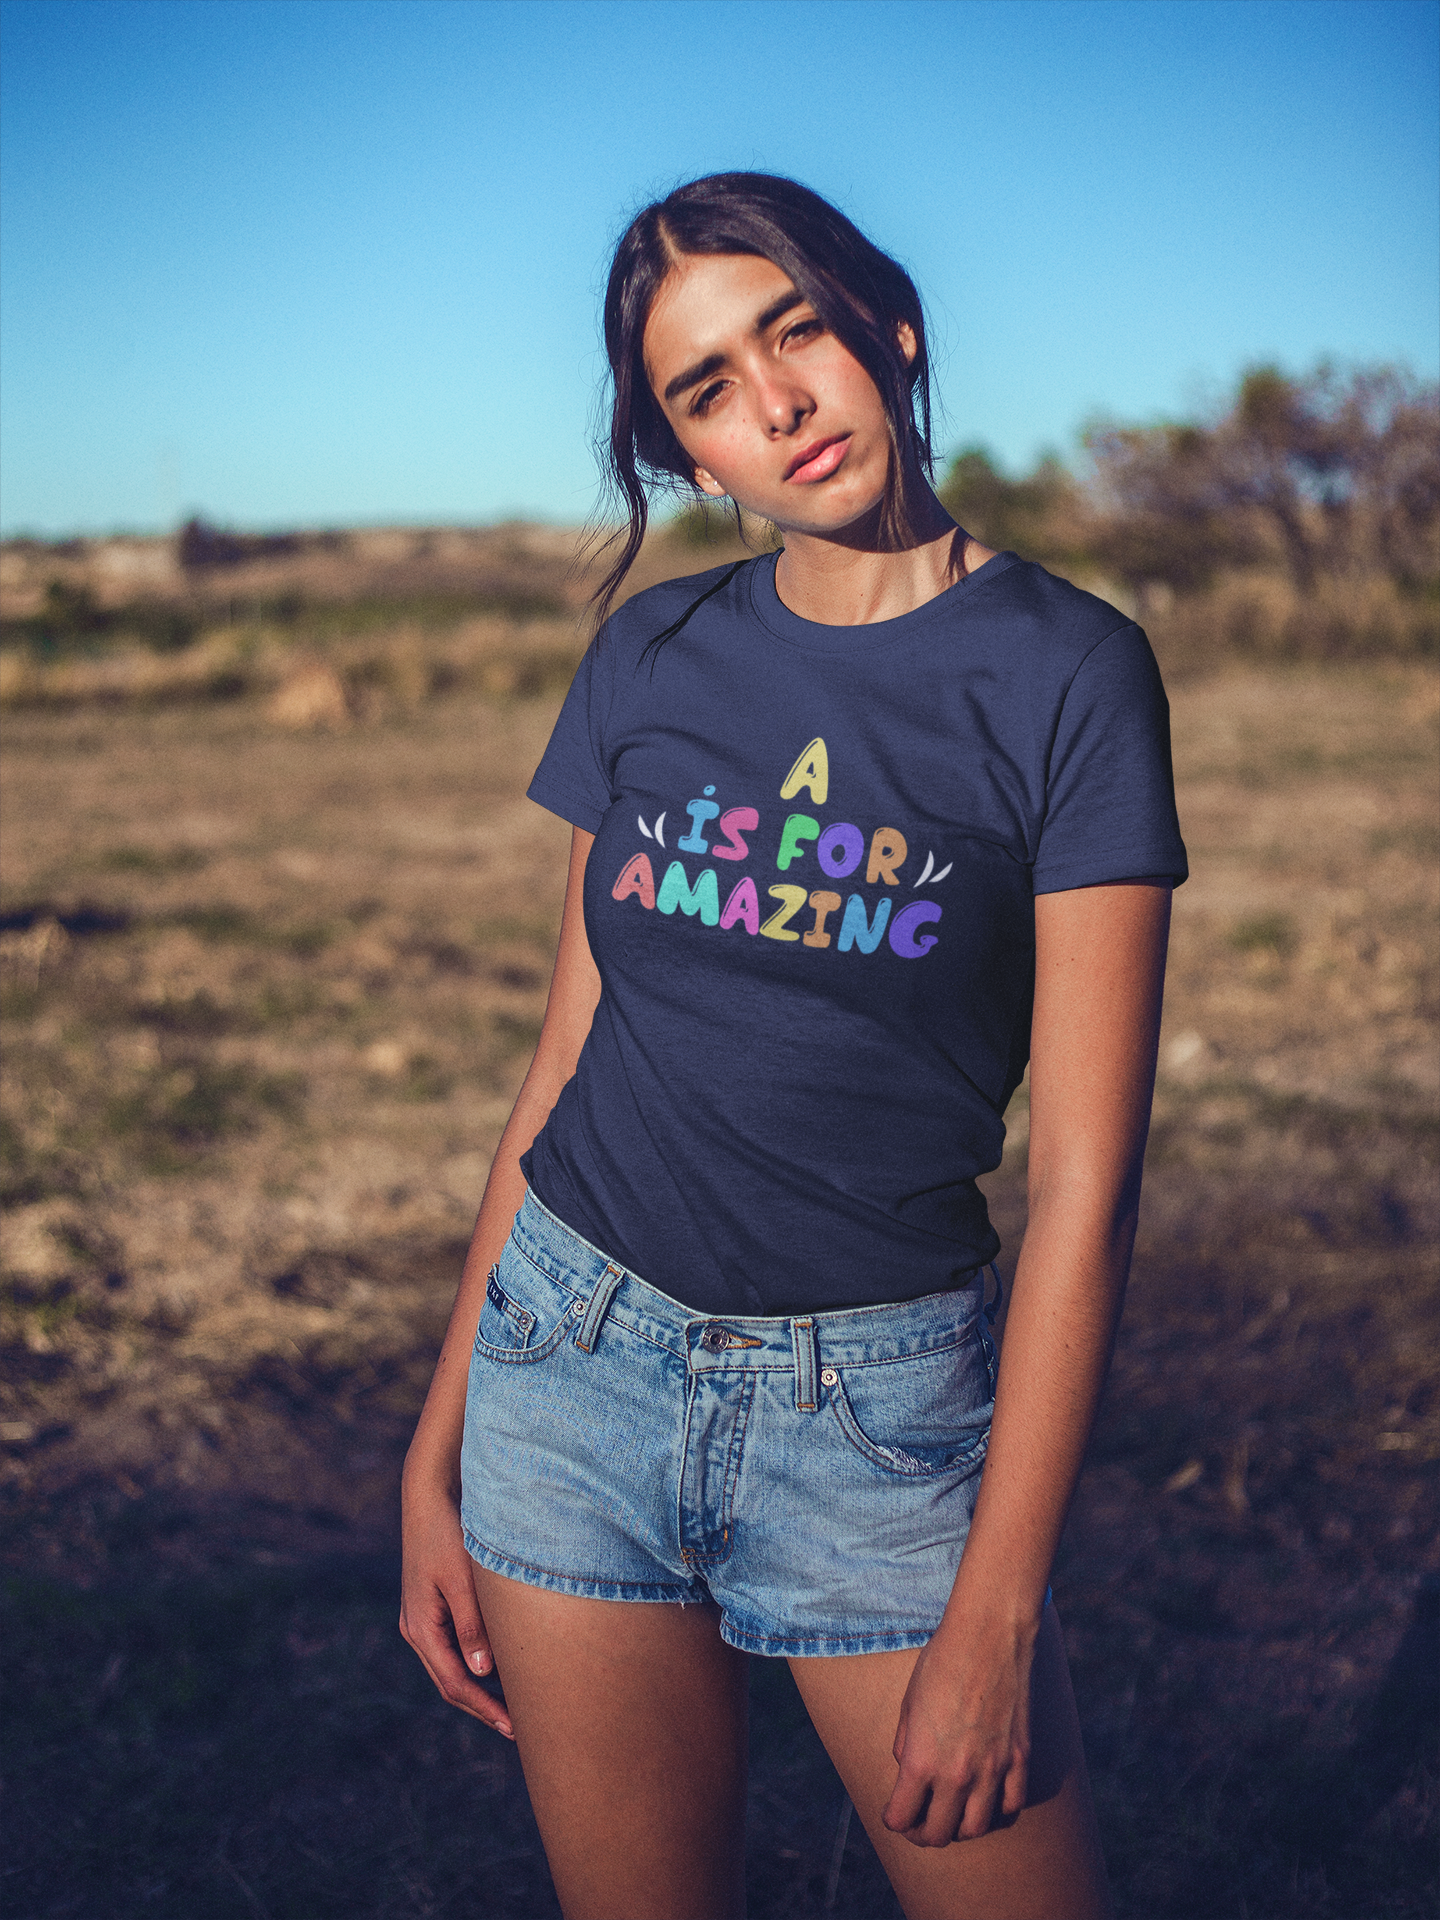 A is For Amazing Women's Premium Tee, Amazing shirts, Inspirational shirts, Motivational Shirts, Positive shirts, Trendy tees